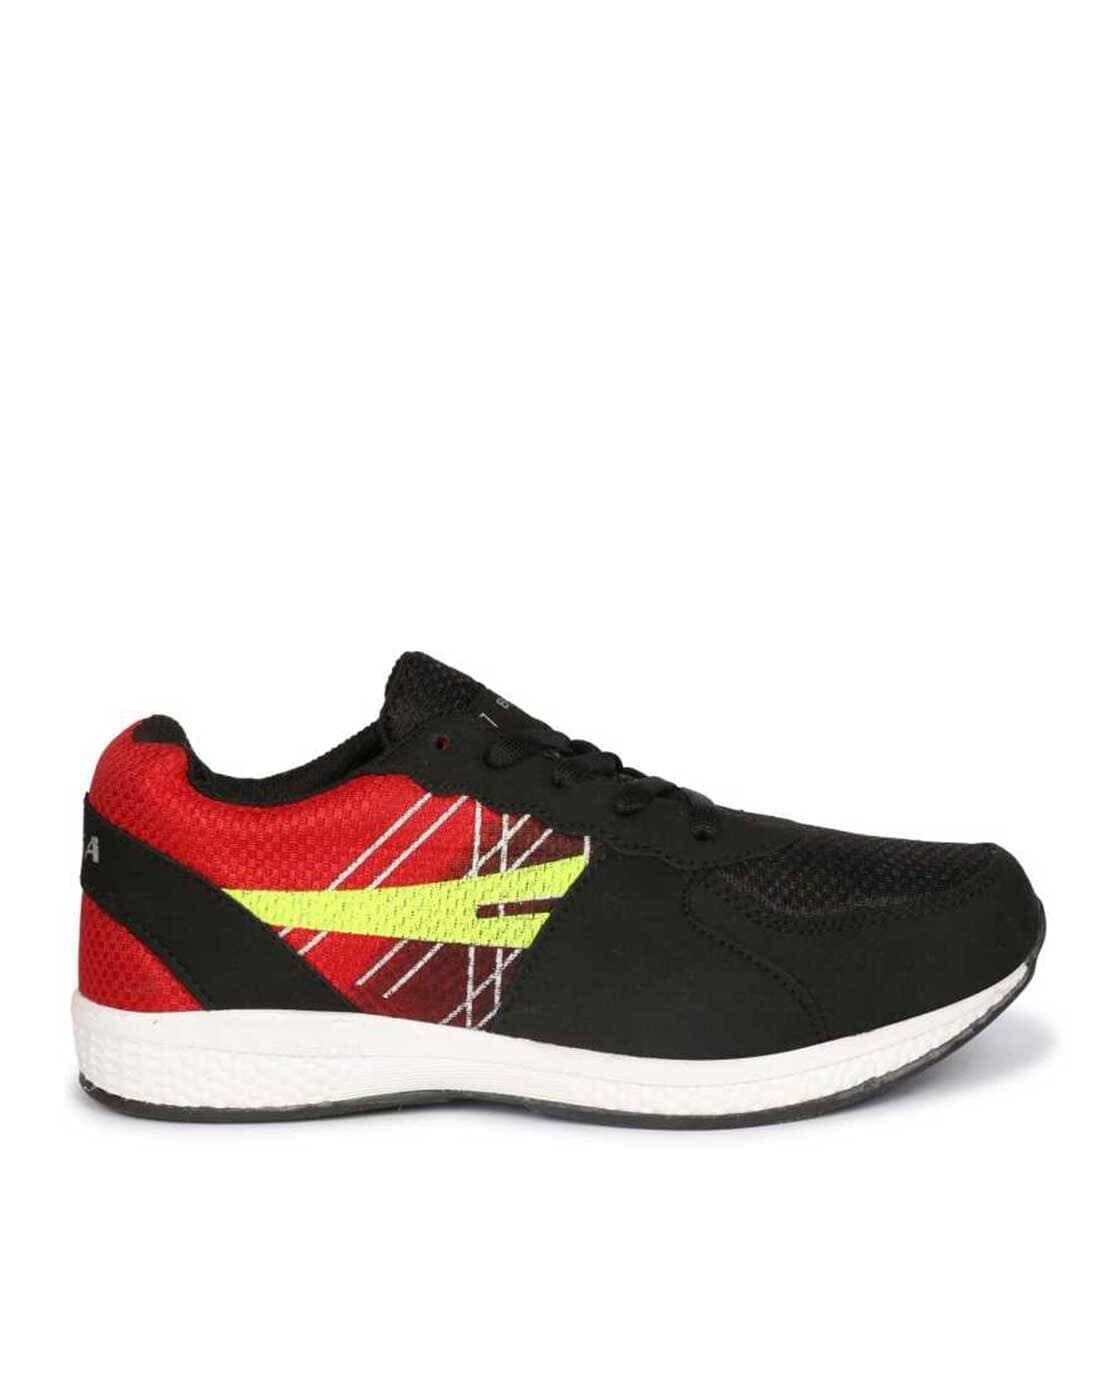 Buy Running Shoe for Men by Sage Sport Shoe Jogger Shoe for Men Women  Unisex ModelRunning Shoe top Model online  Looksgudin